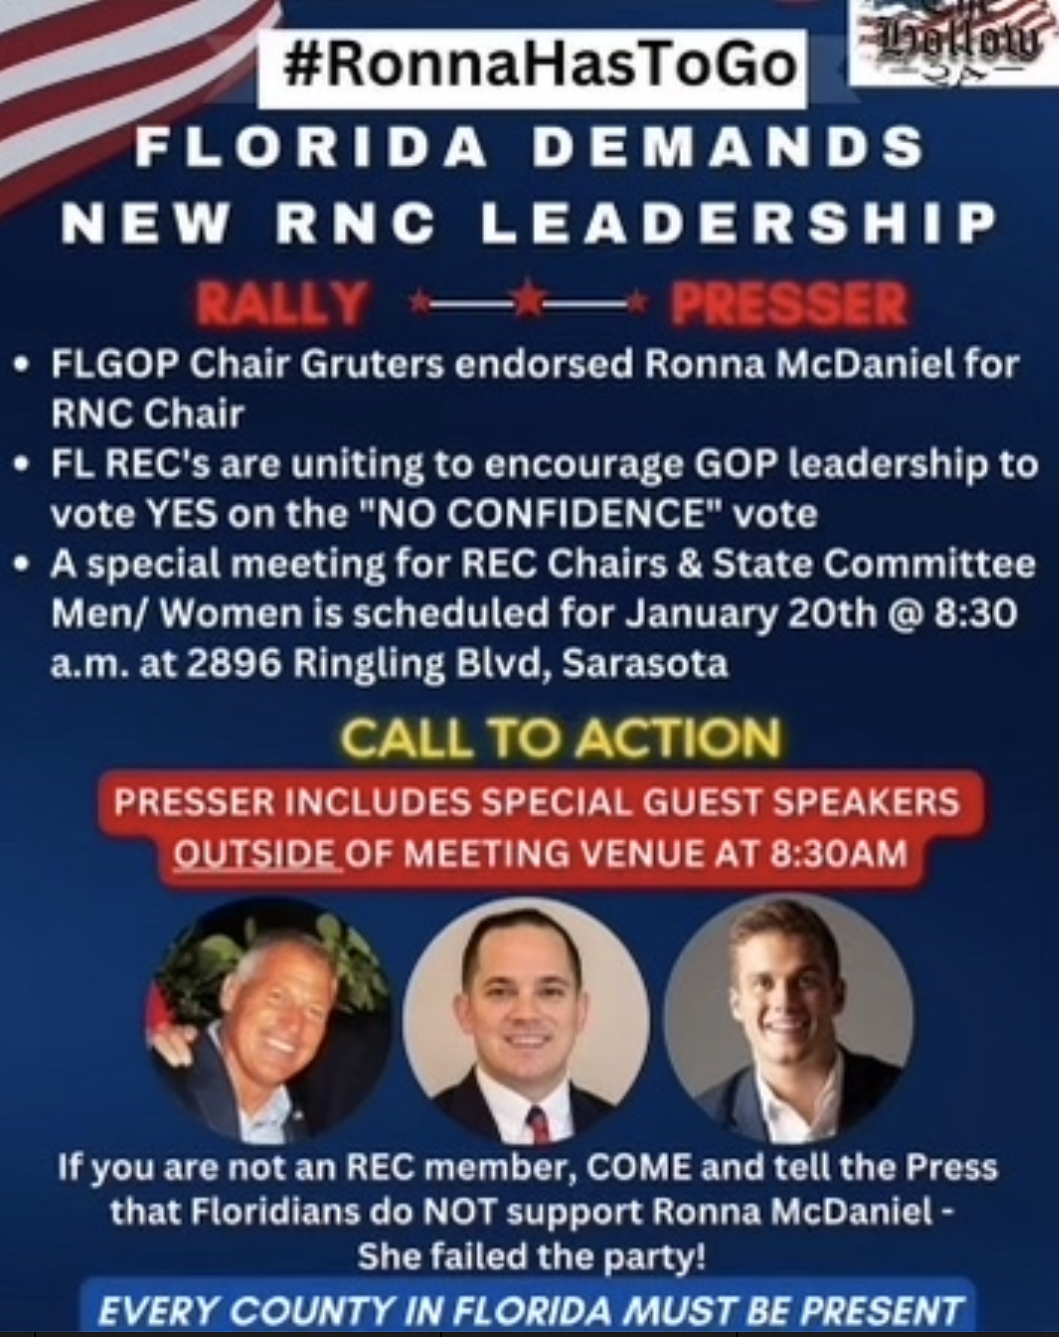 LIVESTREAM 0830 EST: Florida Demands New RNC Leadership Rally/Presser.